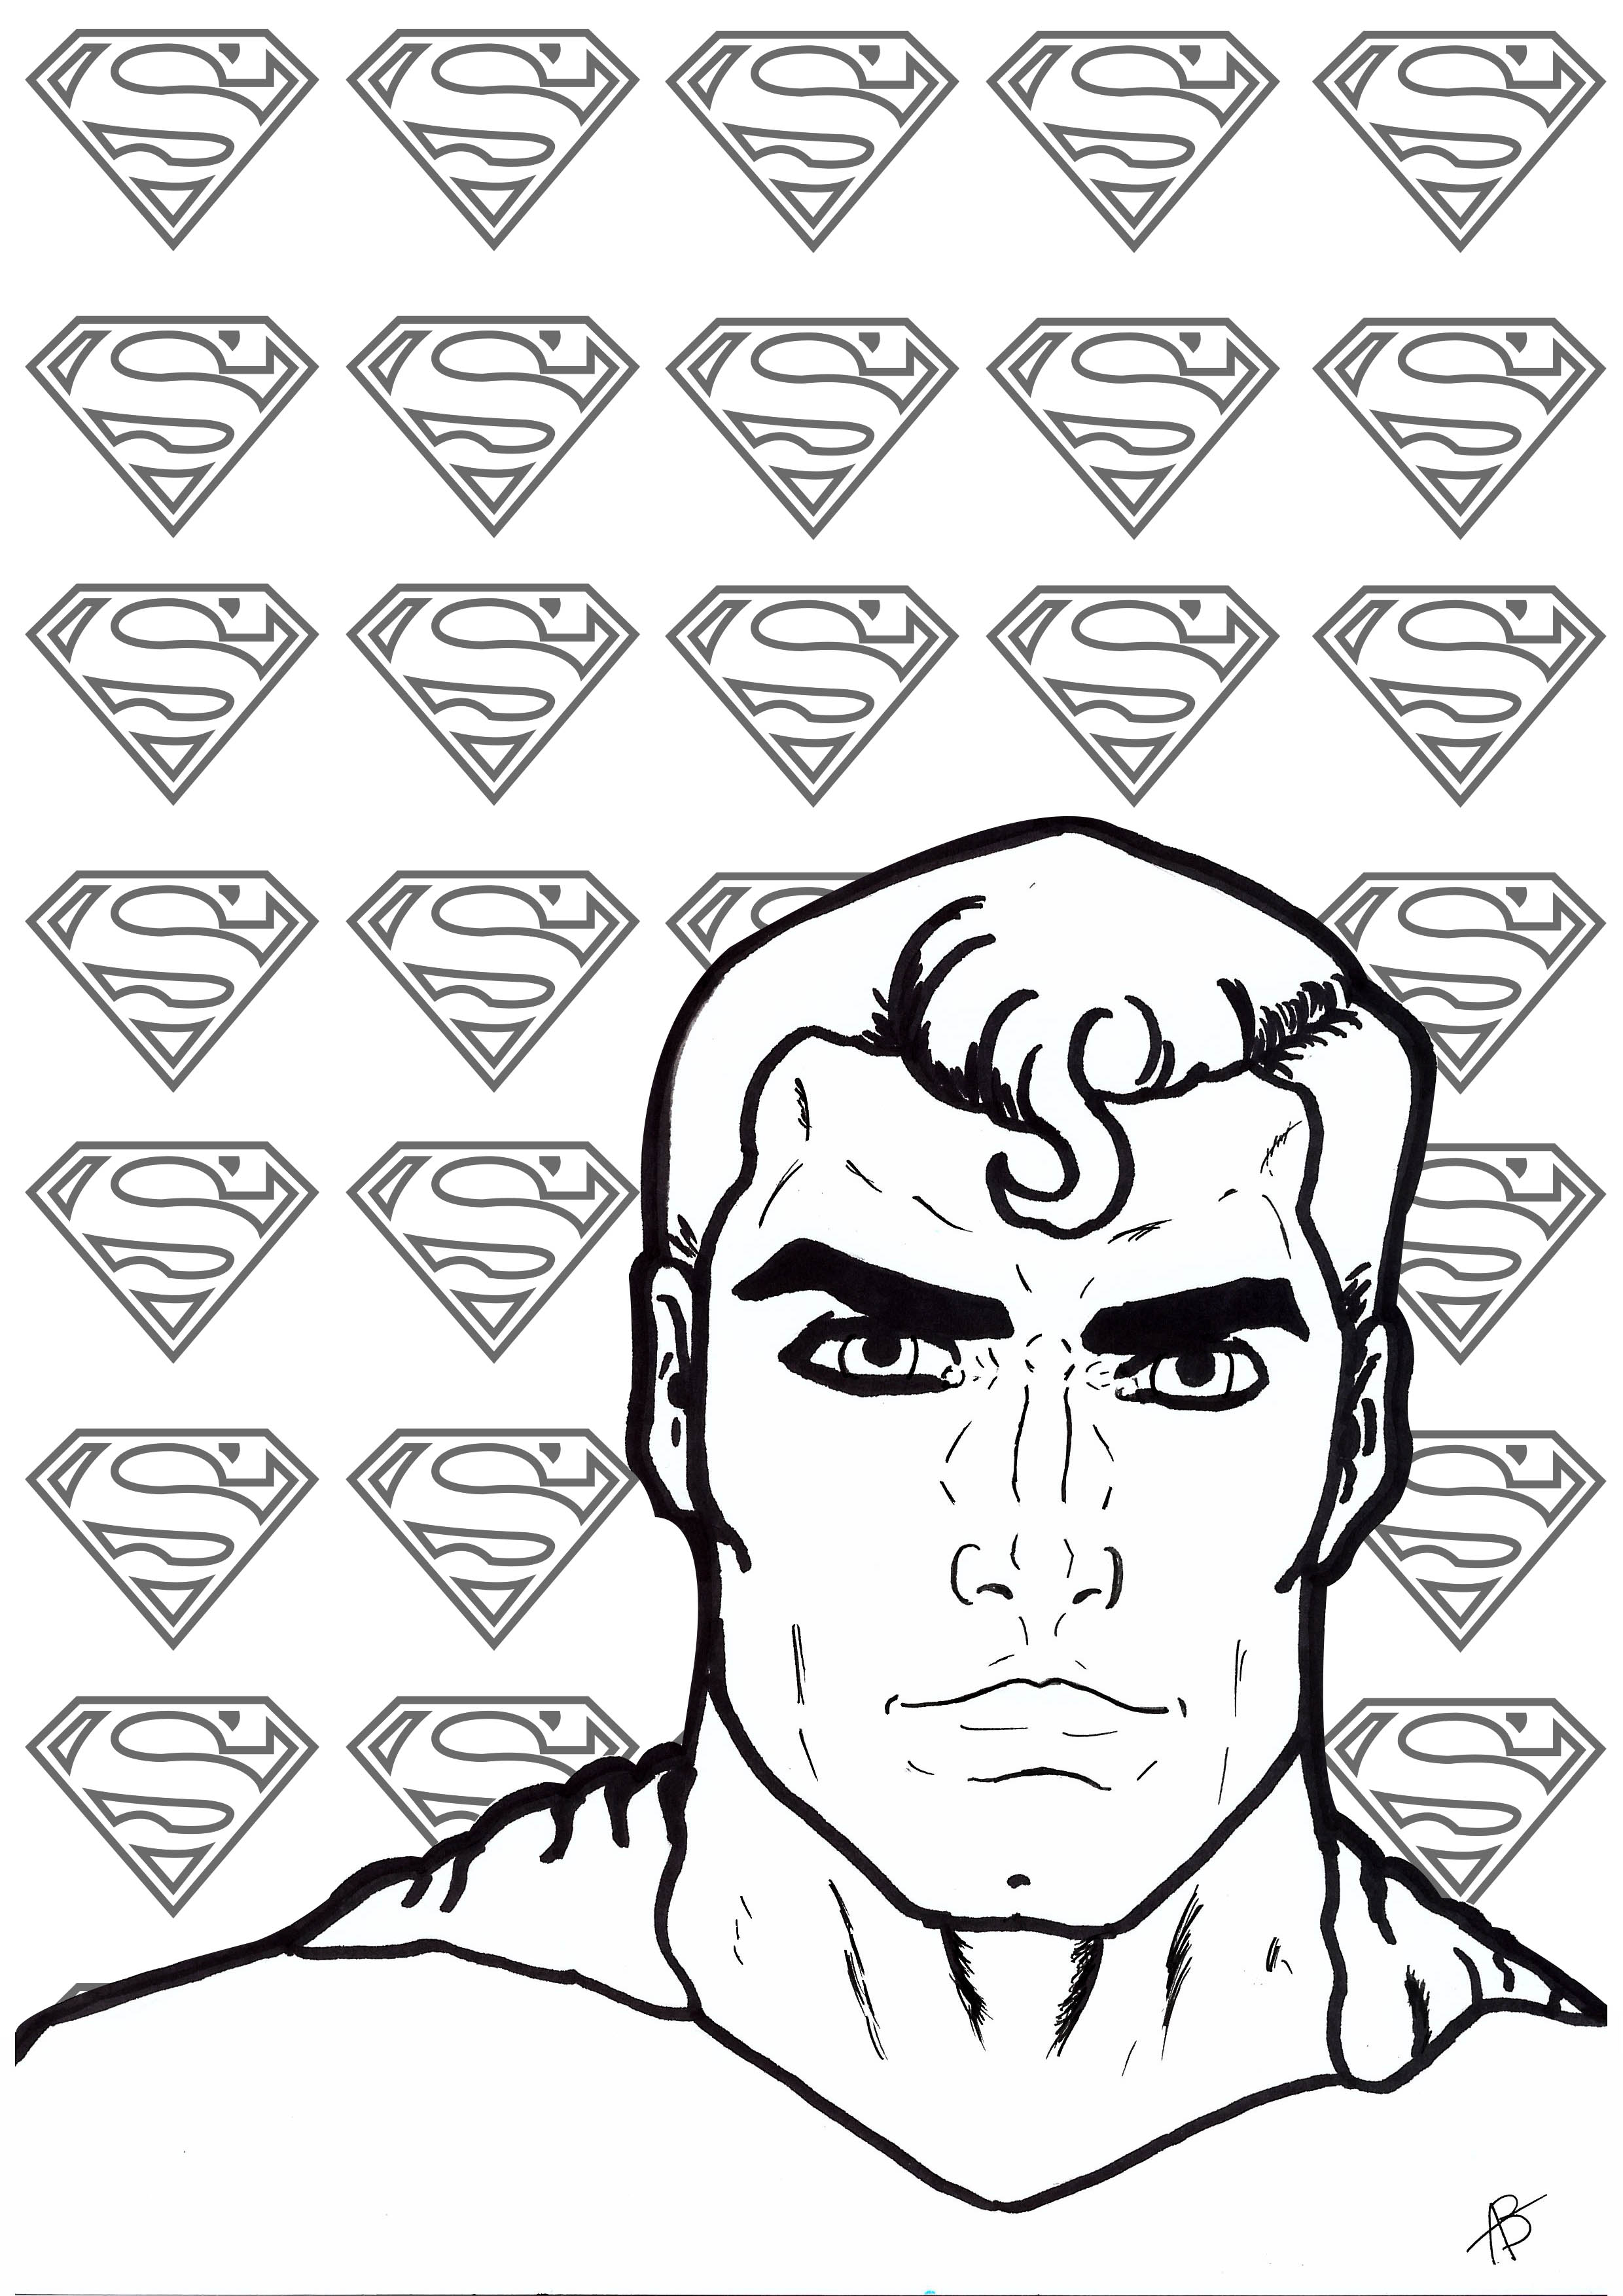 Färbung inspiriert durch den Superhelden Superman, Künstler : Allan